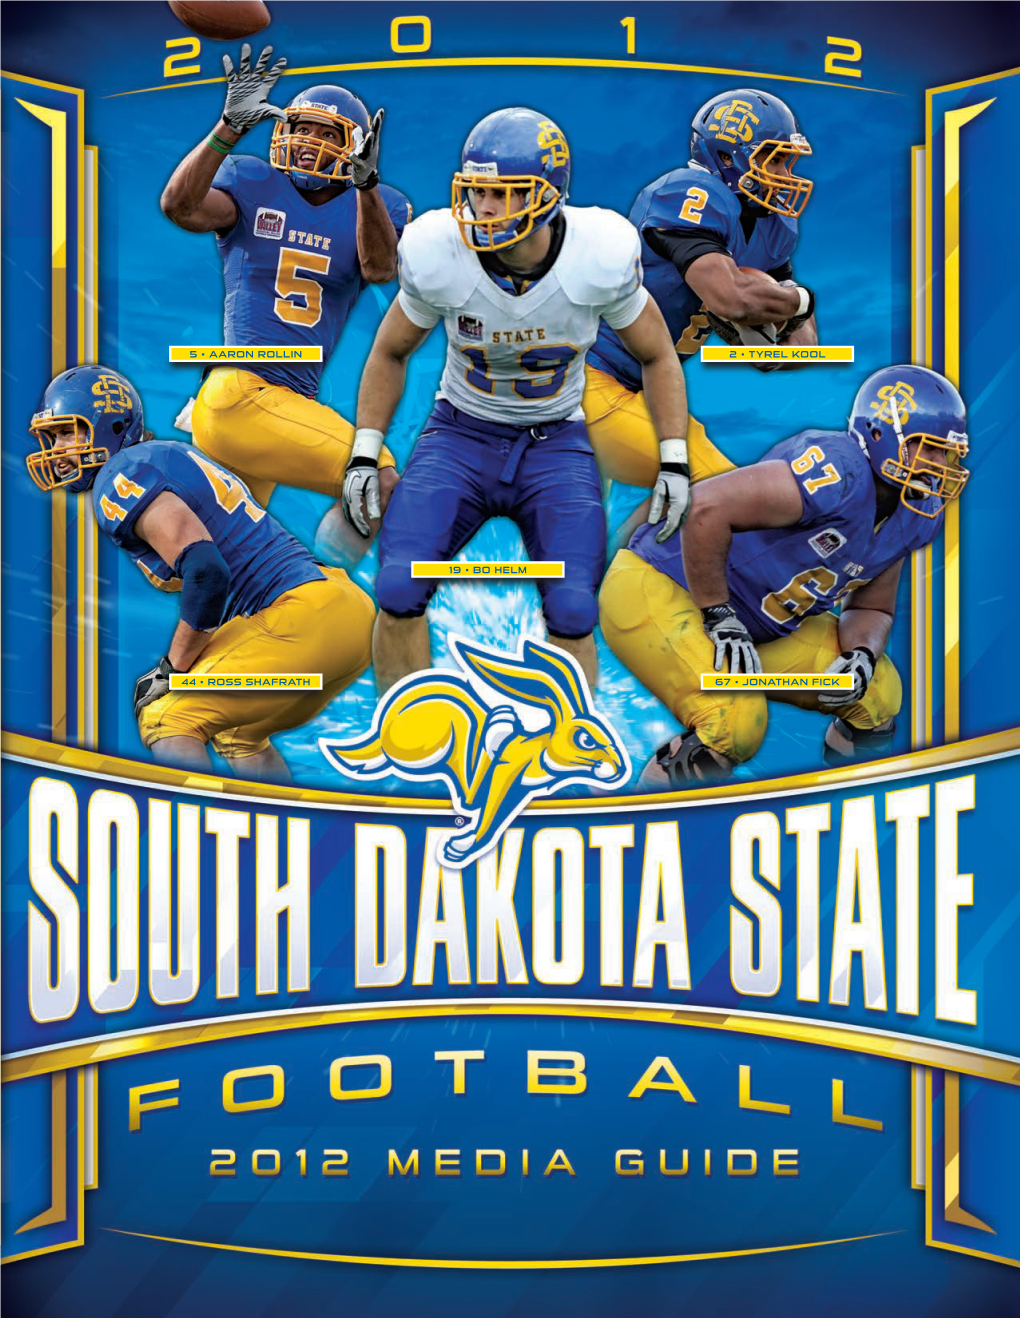 South Dakota State Football 2012 Media Guide